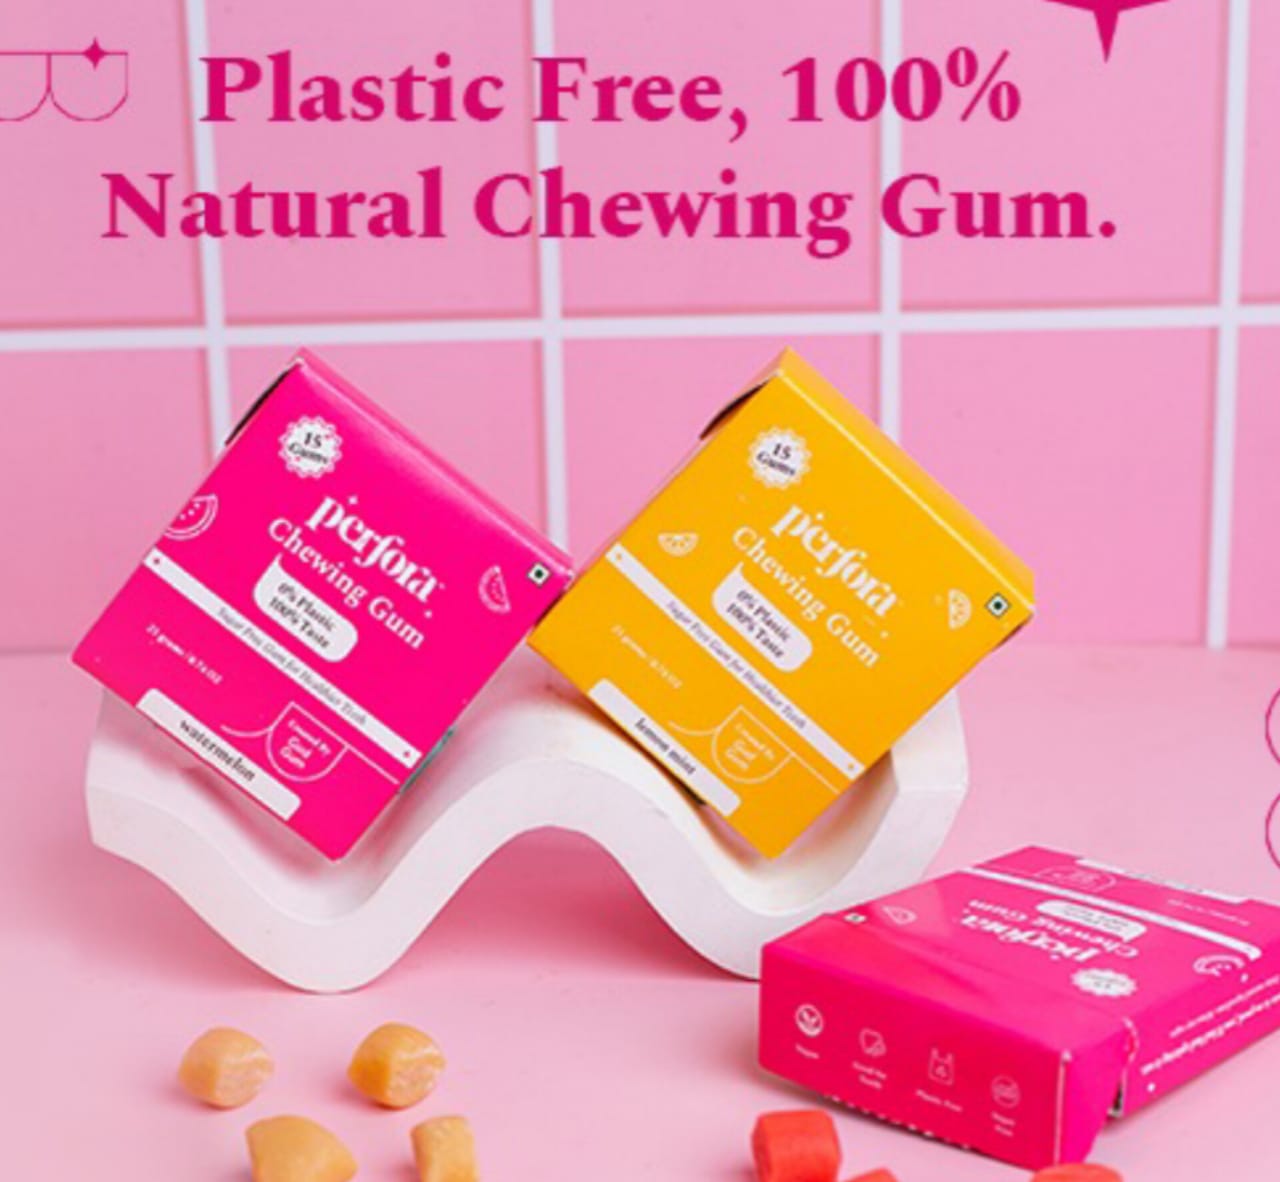 Plastic Free Chewing Gum Combo